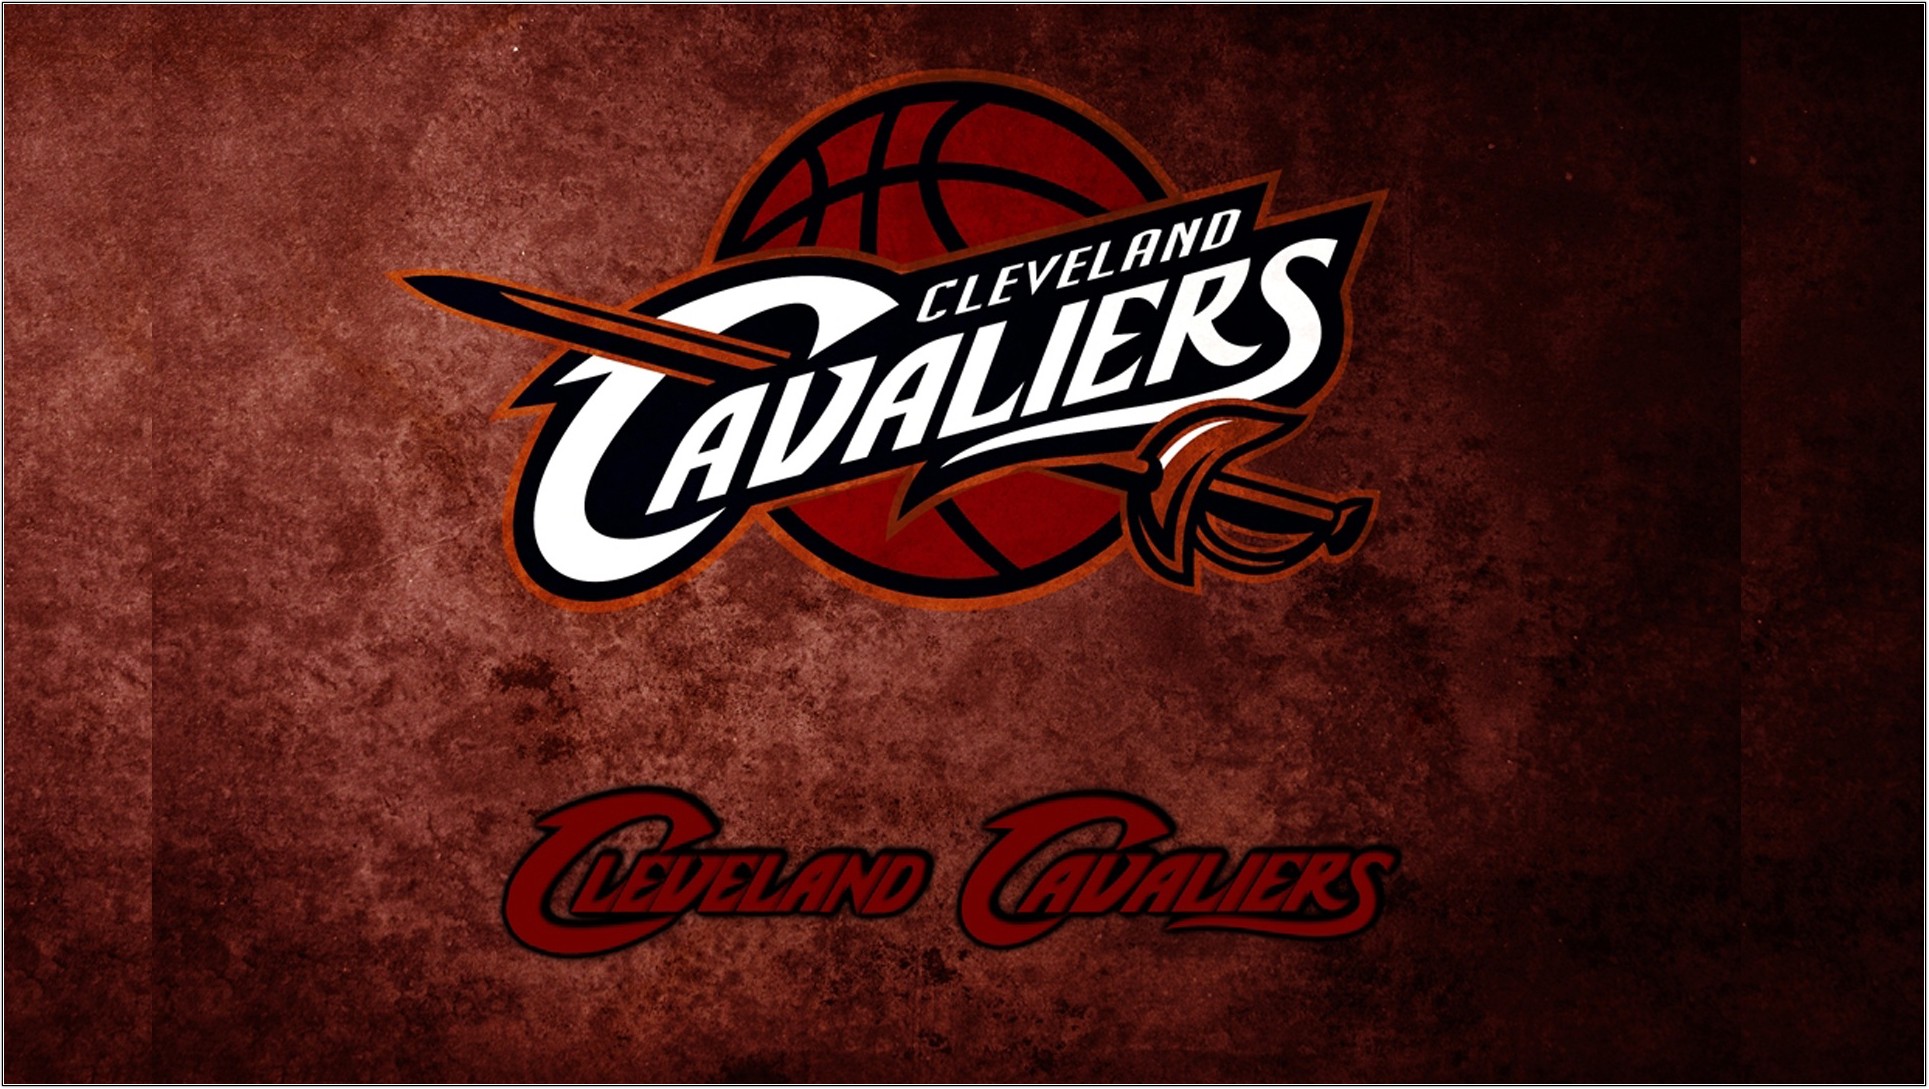 Cleveland Cavaliers Logo Wallpaper - Cleveland Cavaliers Wallpaper 1080p - HD Wallpaper 